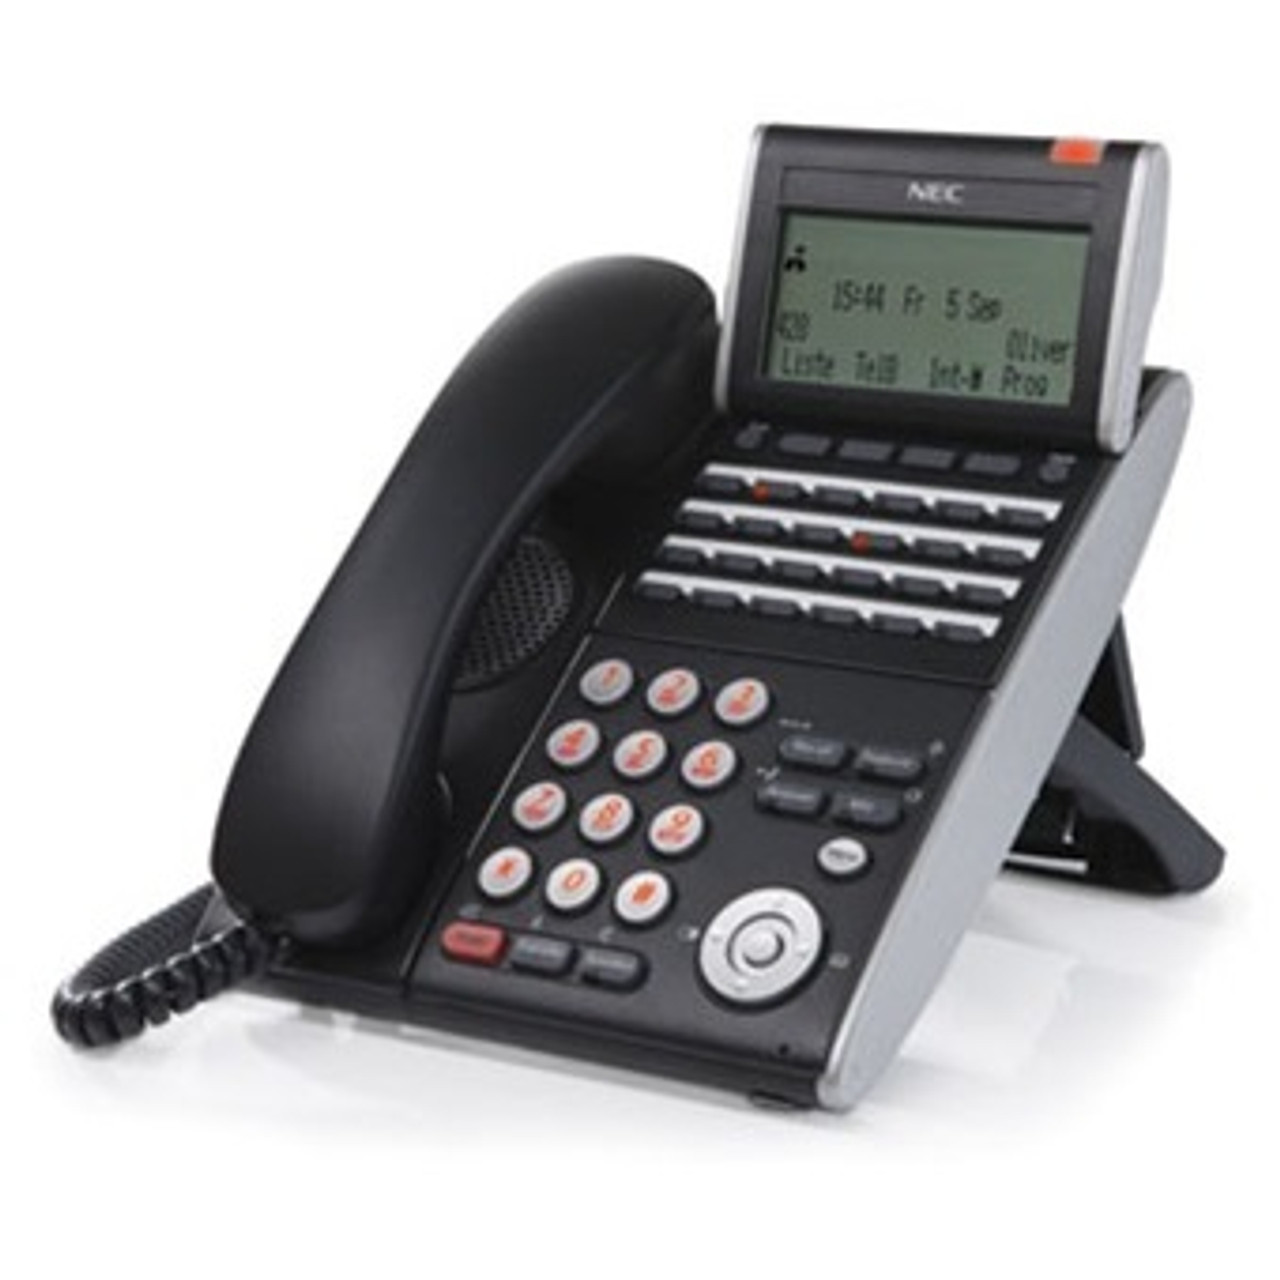 NEC ITL-24D-1 DT700 Univerge IP Phone 690004